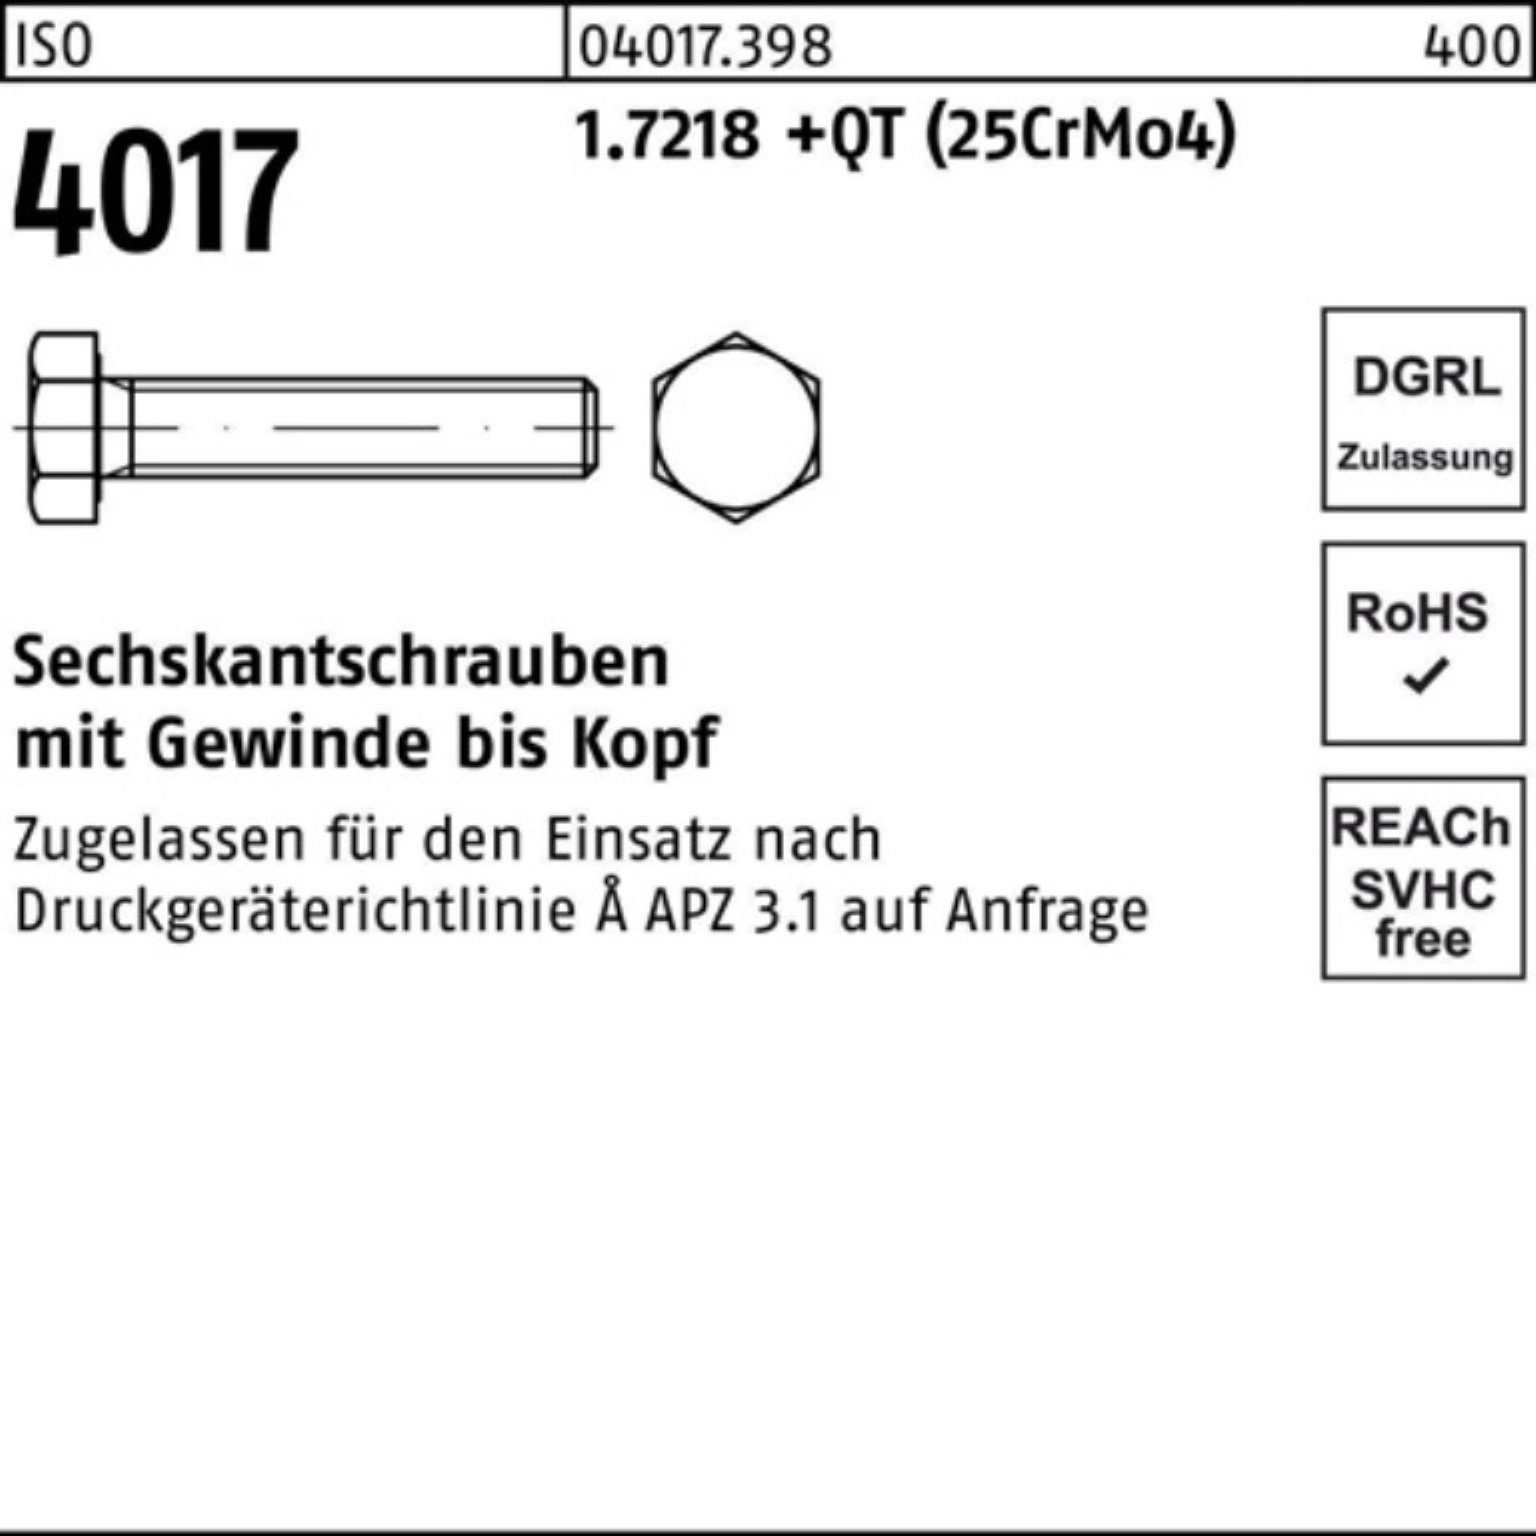 Bufab Sechskantschraube (25CrMo4) M33x 1.7218 +QT 4017 ISO Sechskantschraube 100er VG Pack 110